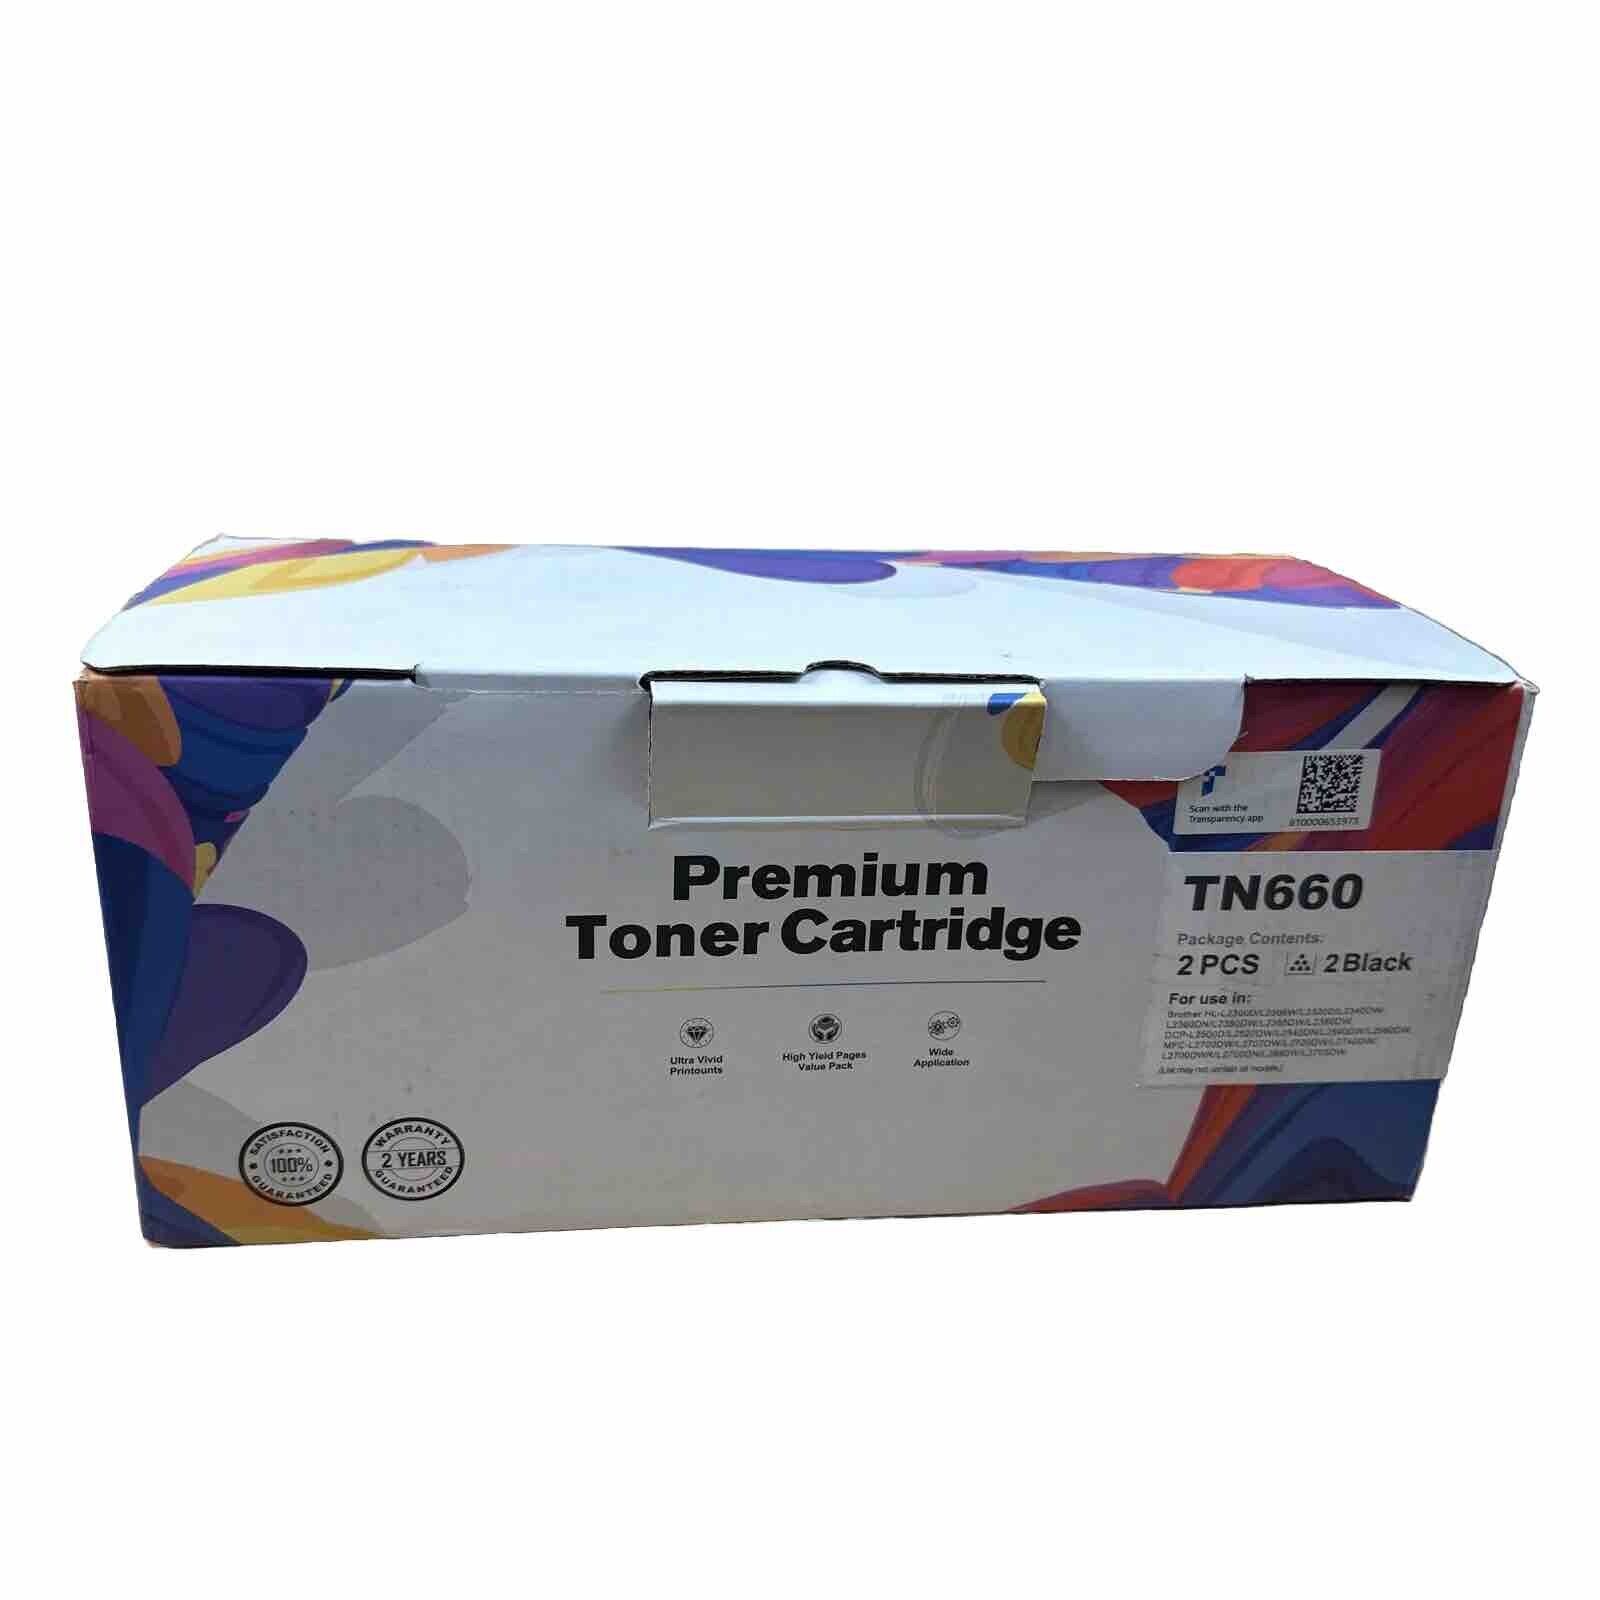 Premium Toner Cartridge TN660 2 Count, Brother Printer Color Black